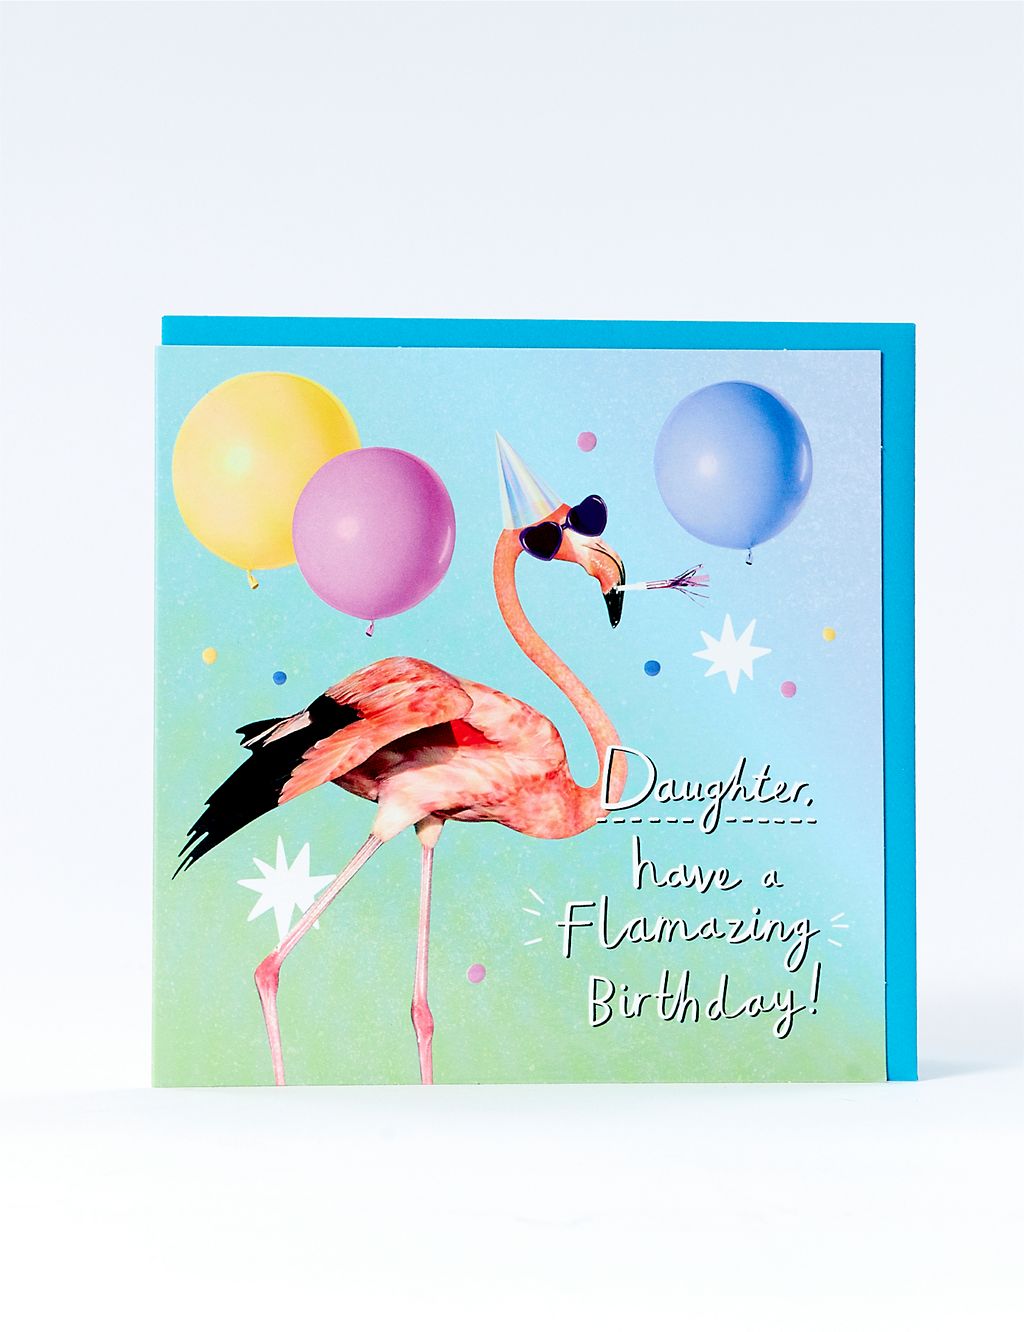 Daughter Fl-amazing Flamingo Birthday Card 1 of 1